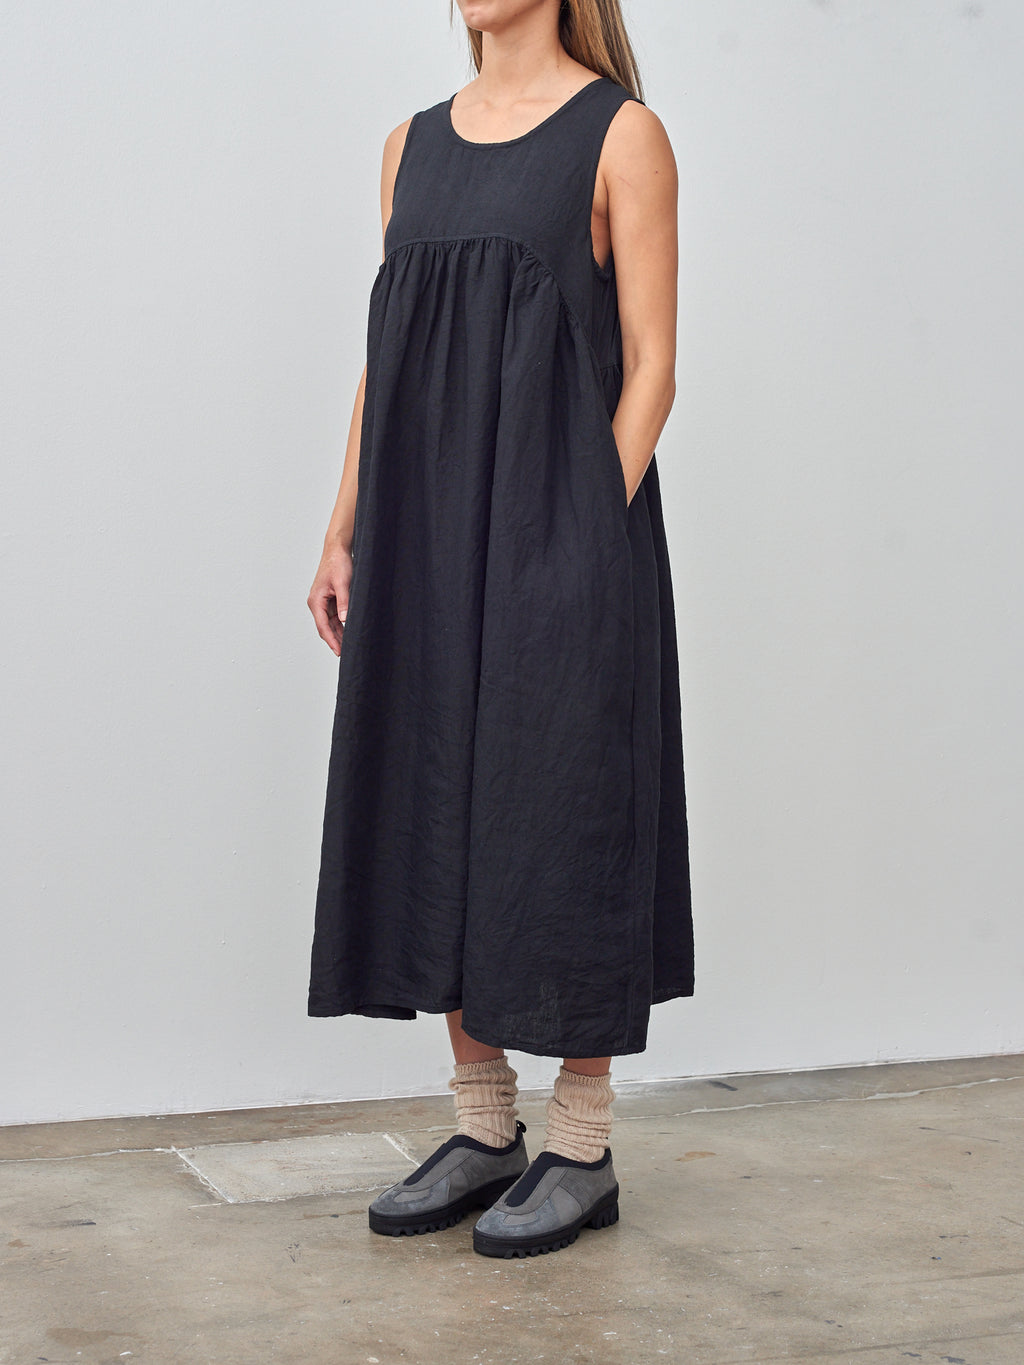 Namu Shop - Ichi Antiquites Linen Canvas Dress - Black